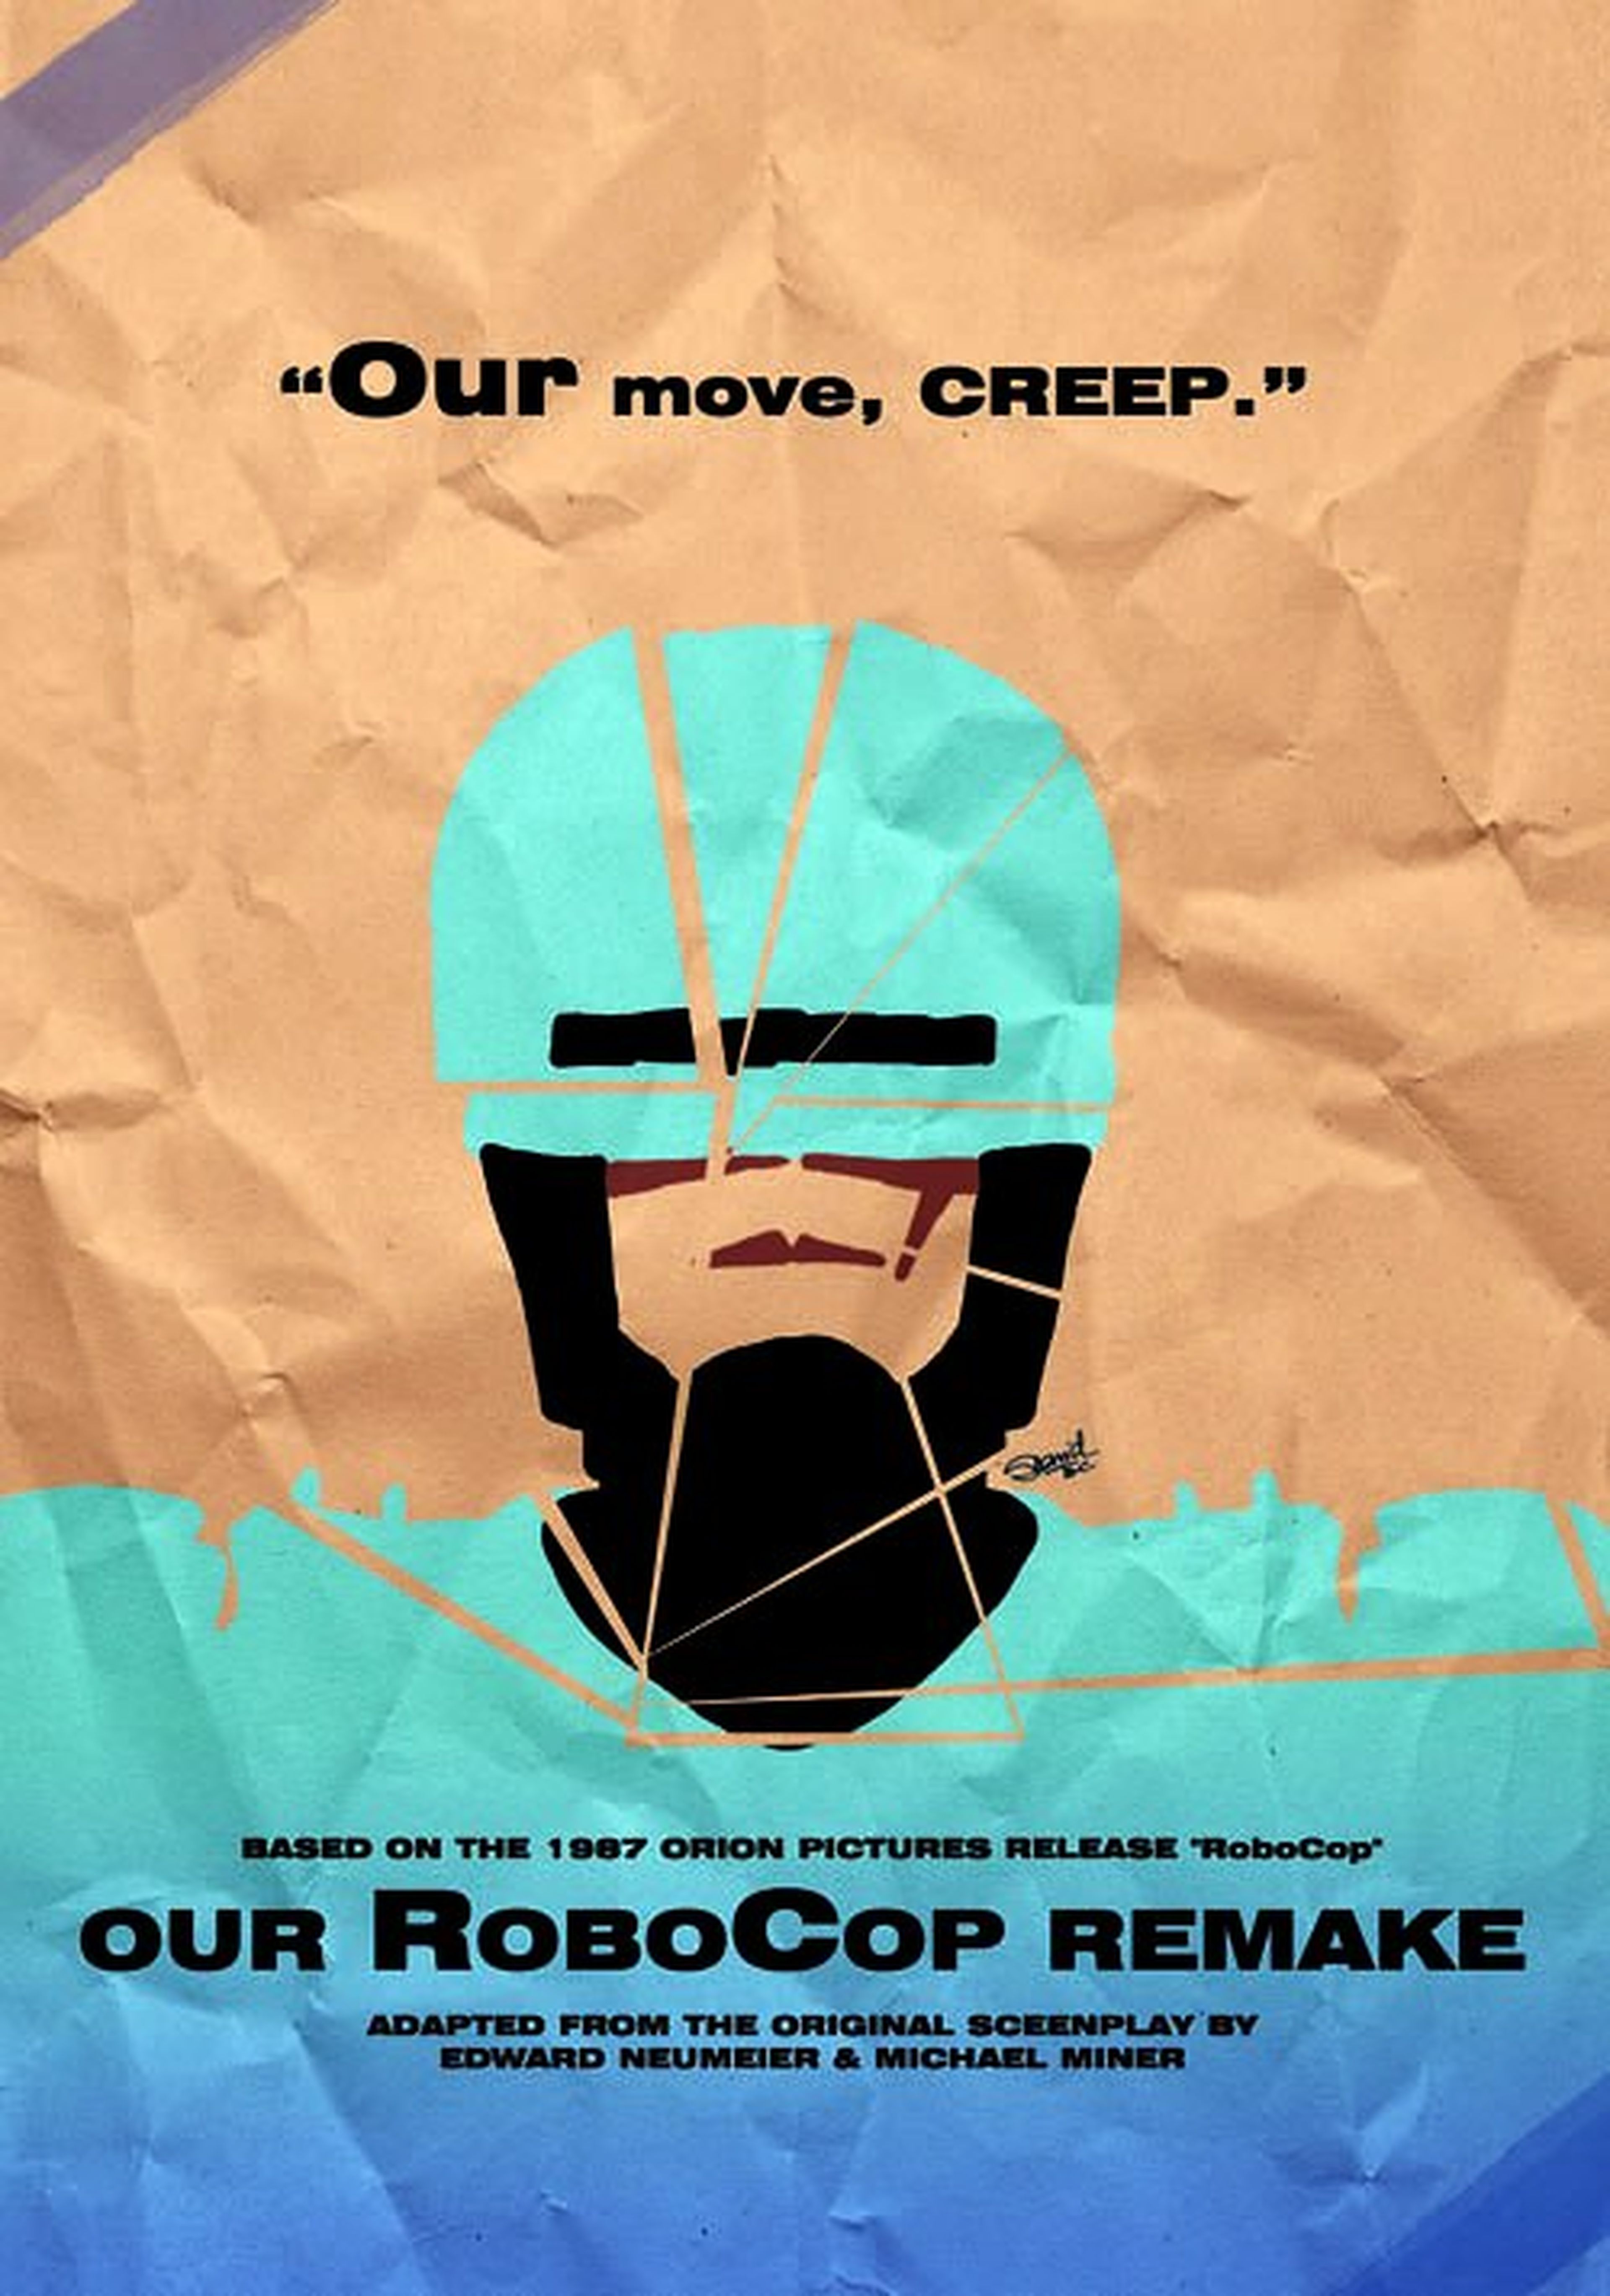 Our Robocop remake